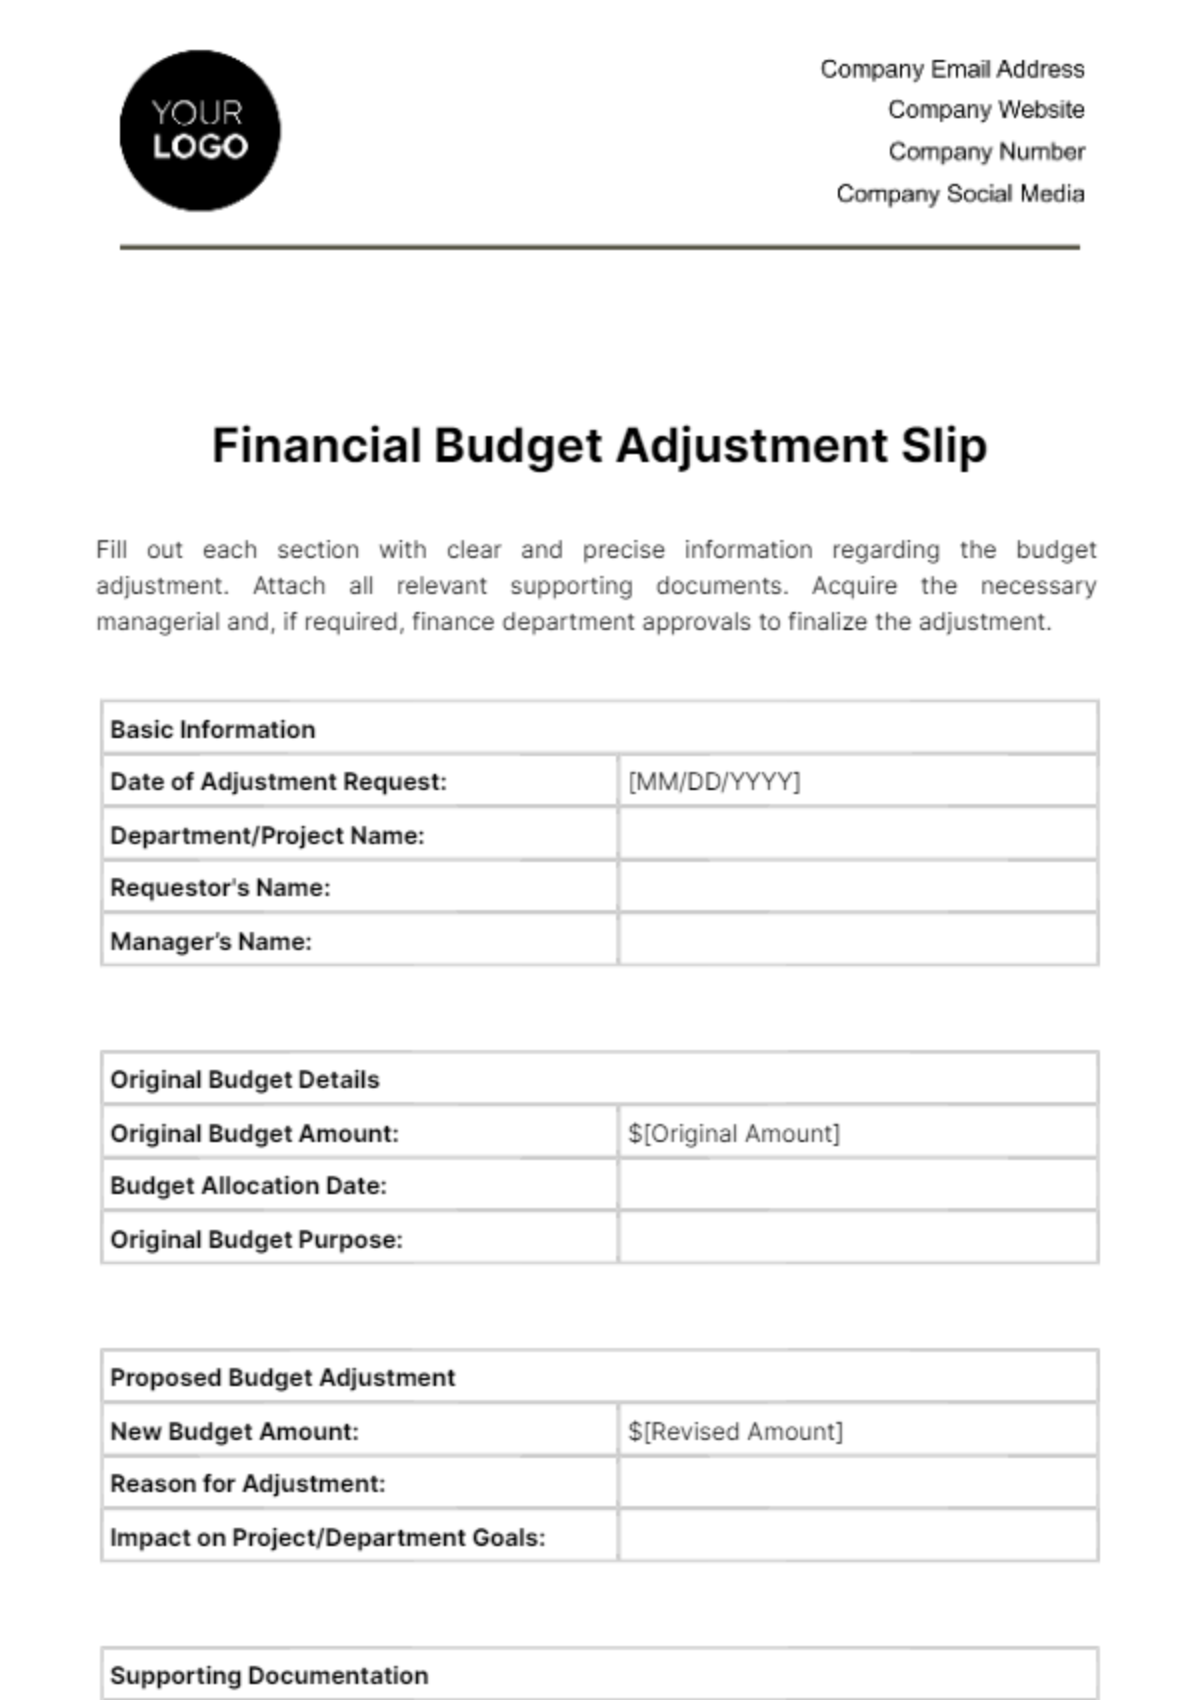 Free Financial Budget Adjustment Slip Template